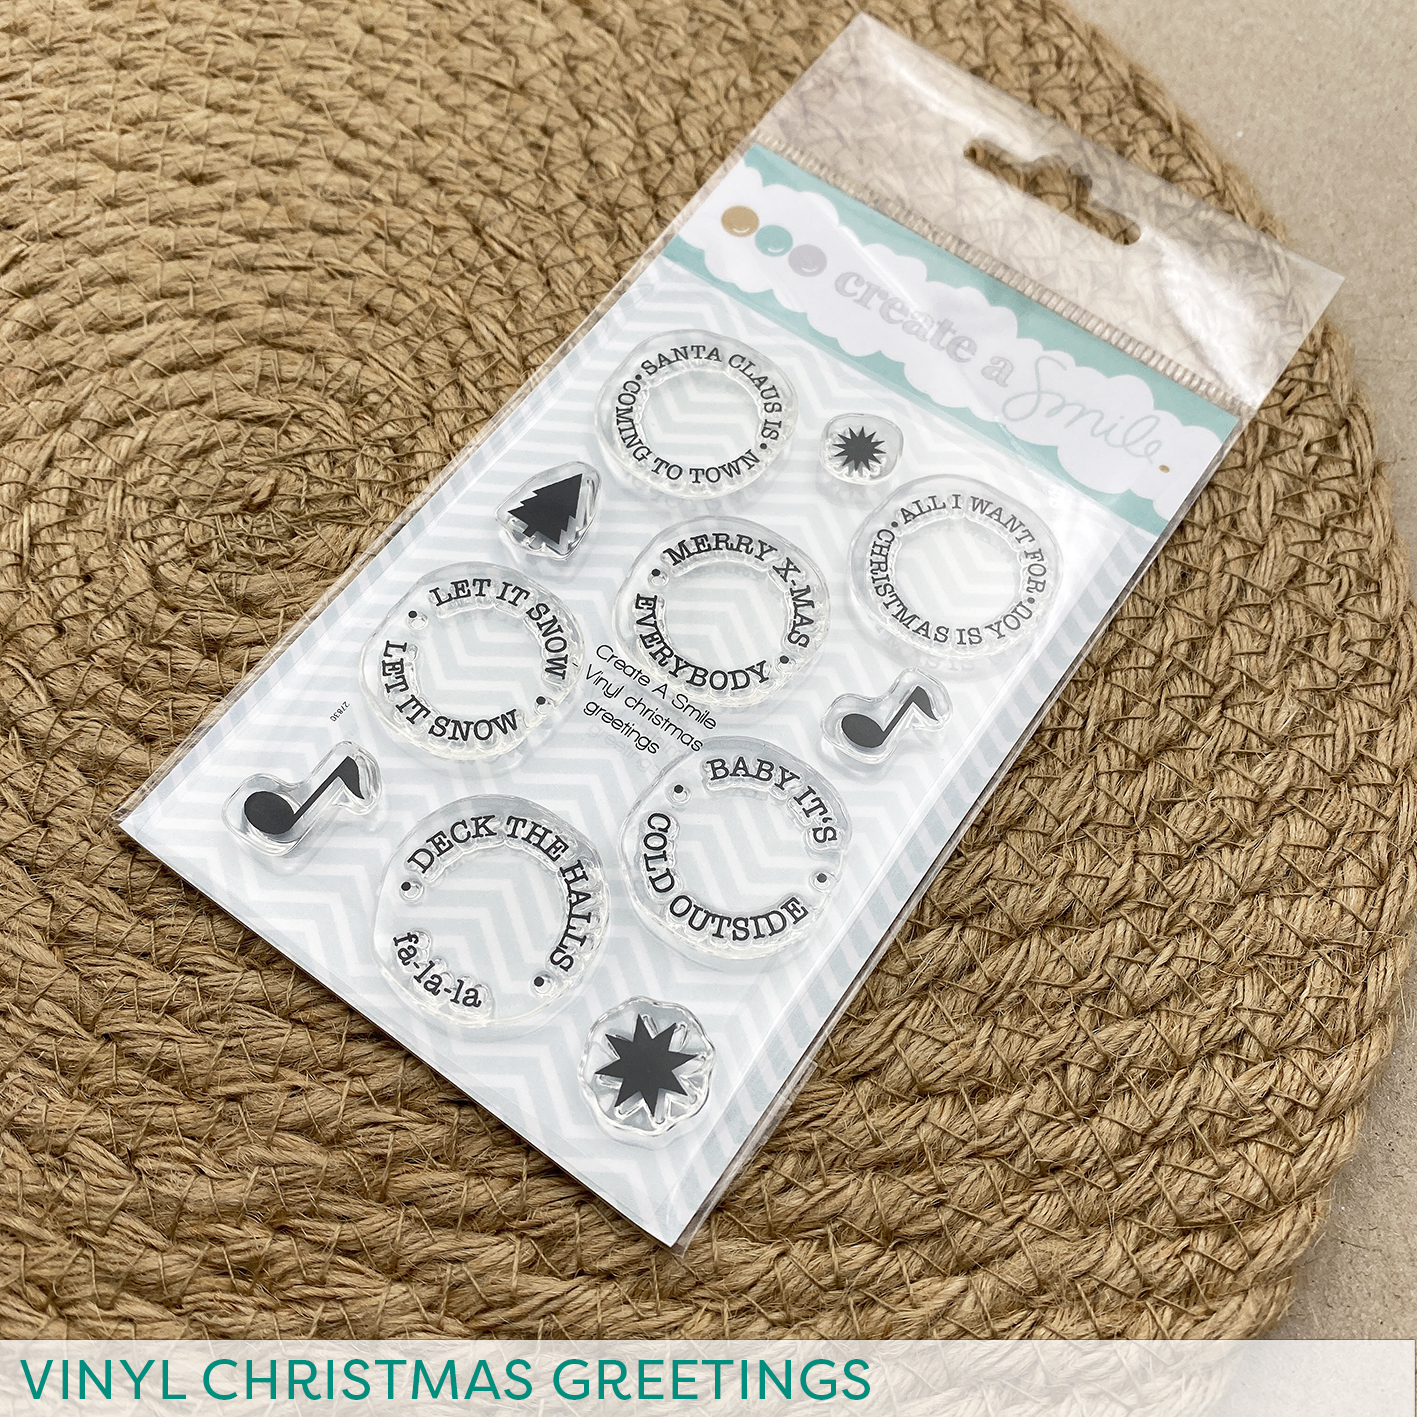 Clear A7 Vinyl Christmas greetings